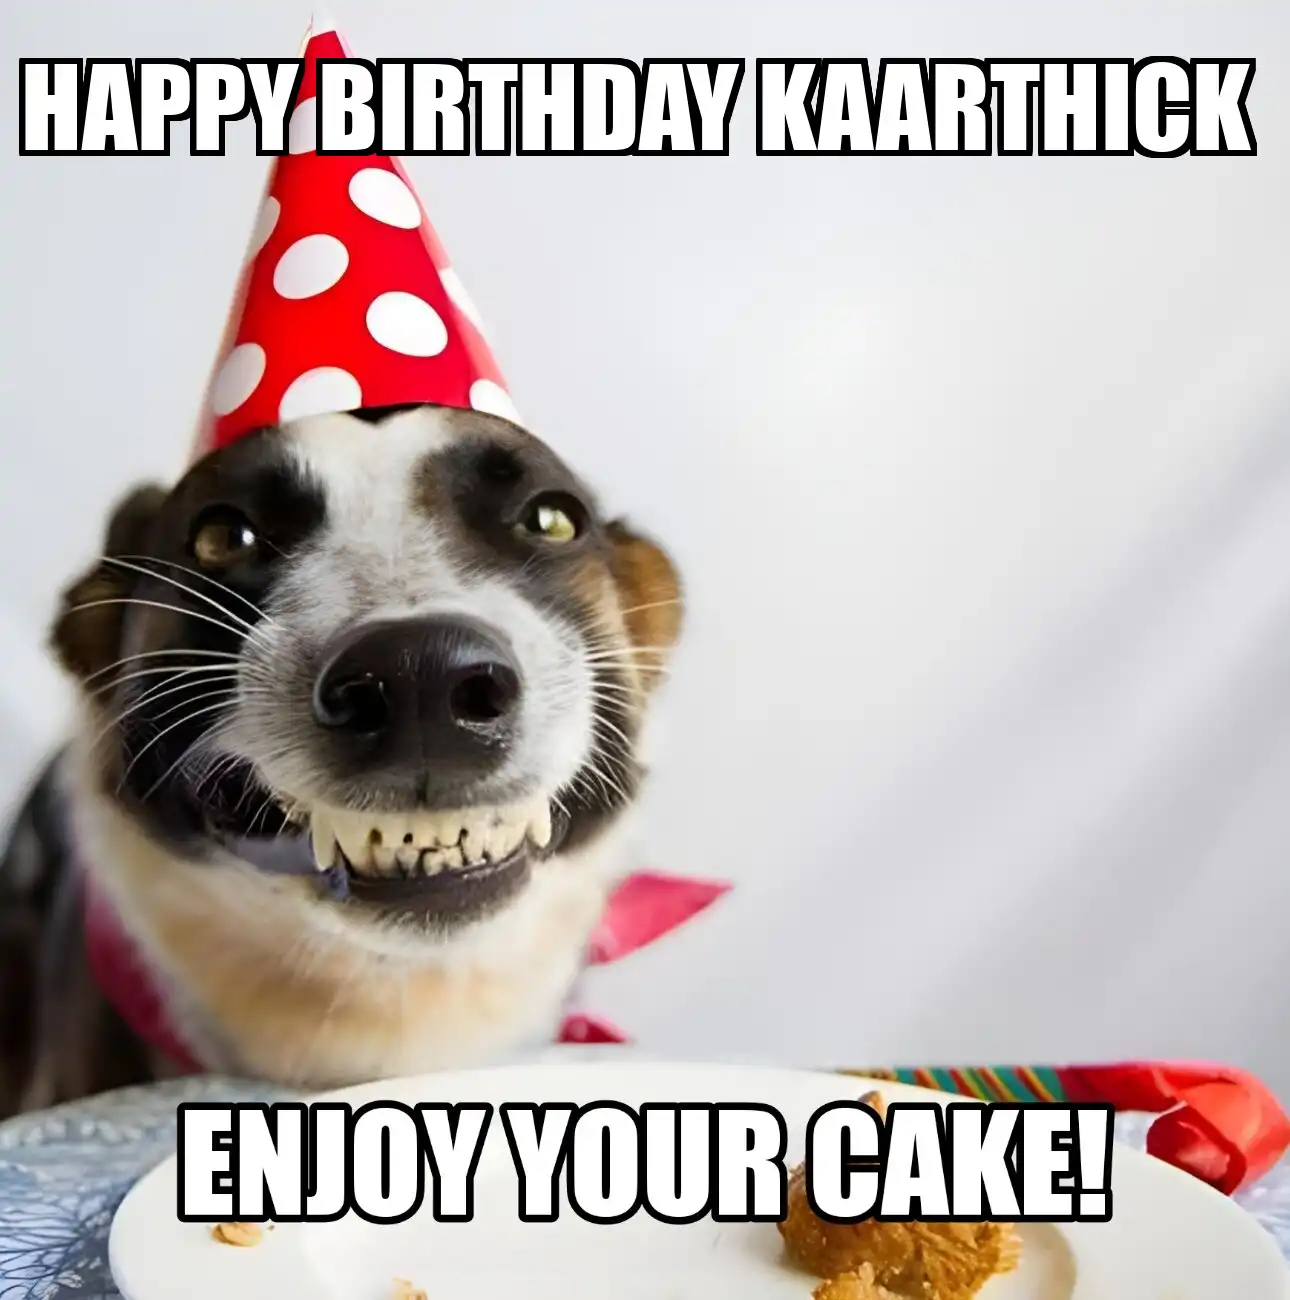 Happy Birthday Kaarthick Enjoy Your Cake Dog Meme